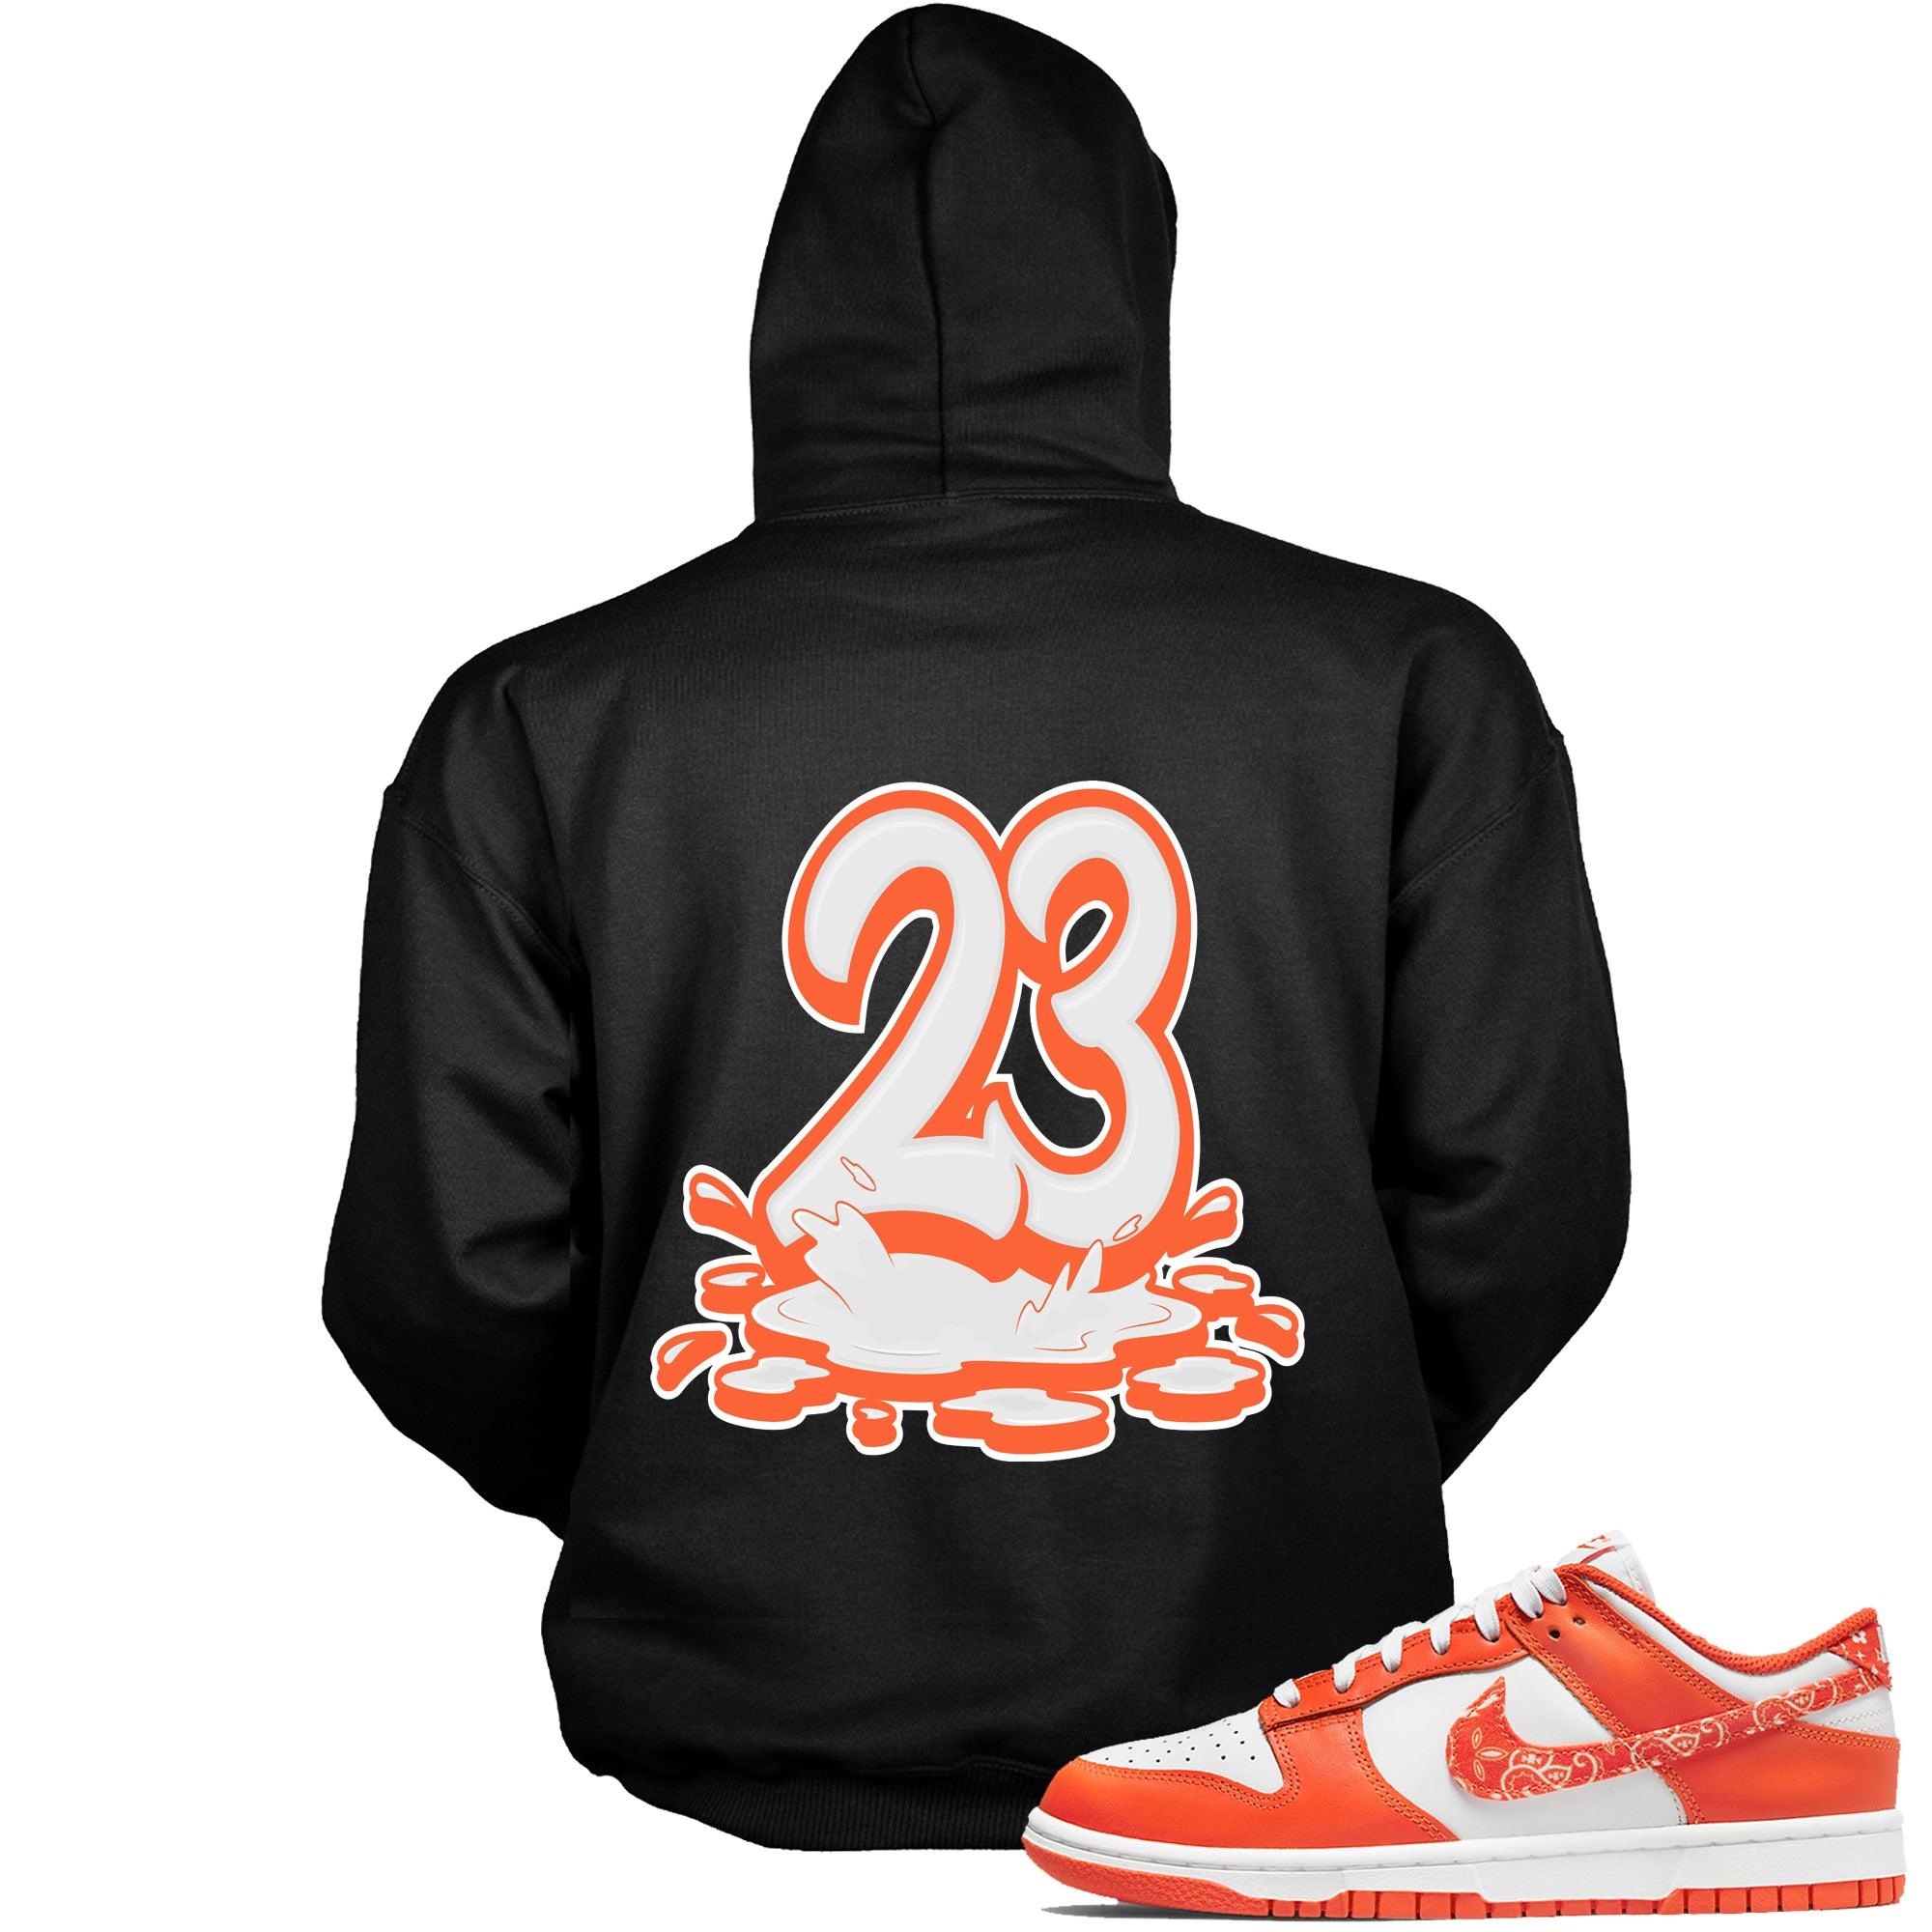 Number 23 Melting Hoodie Nike Dunk Low Essential Paisley Pack Orange photo